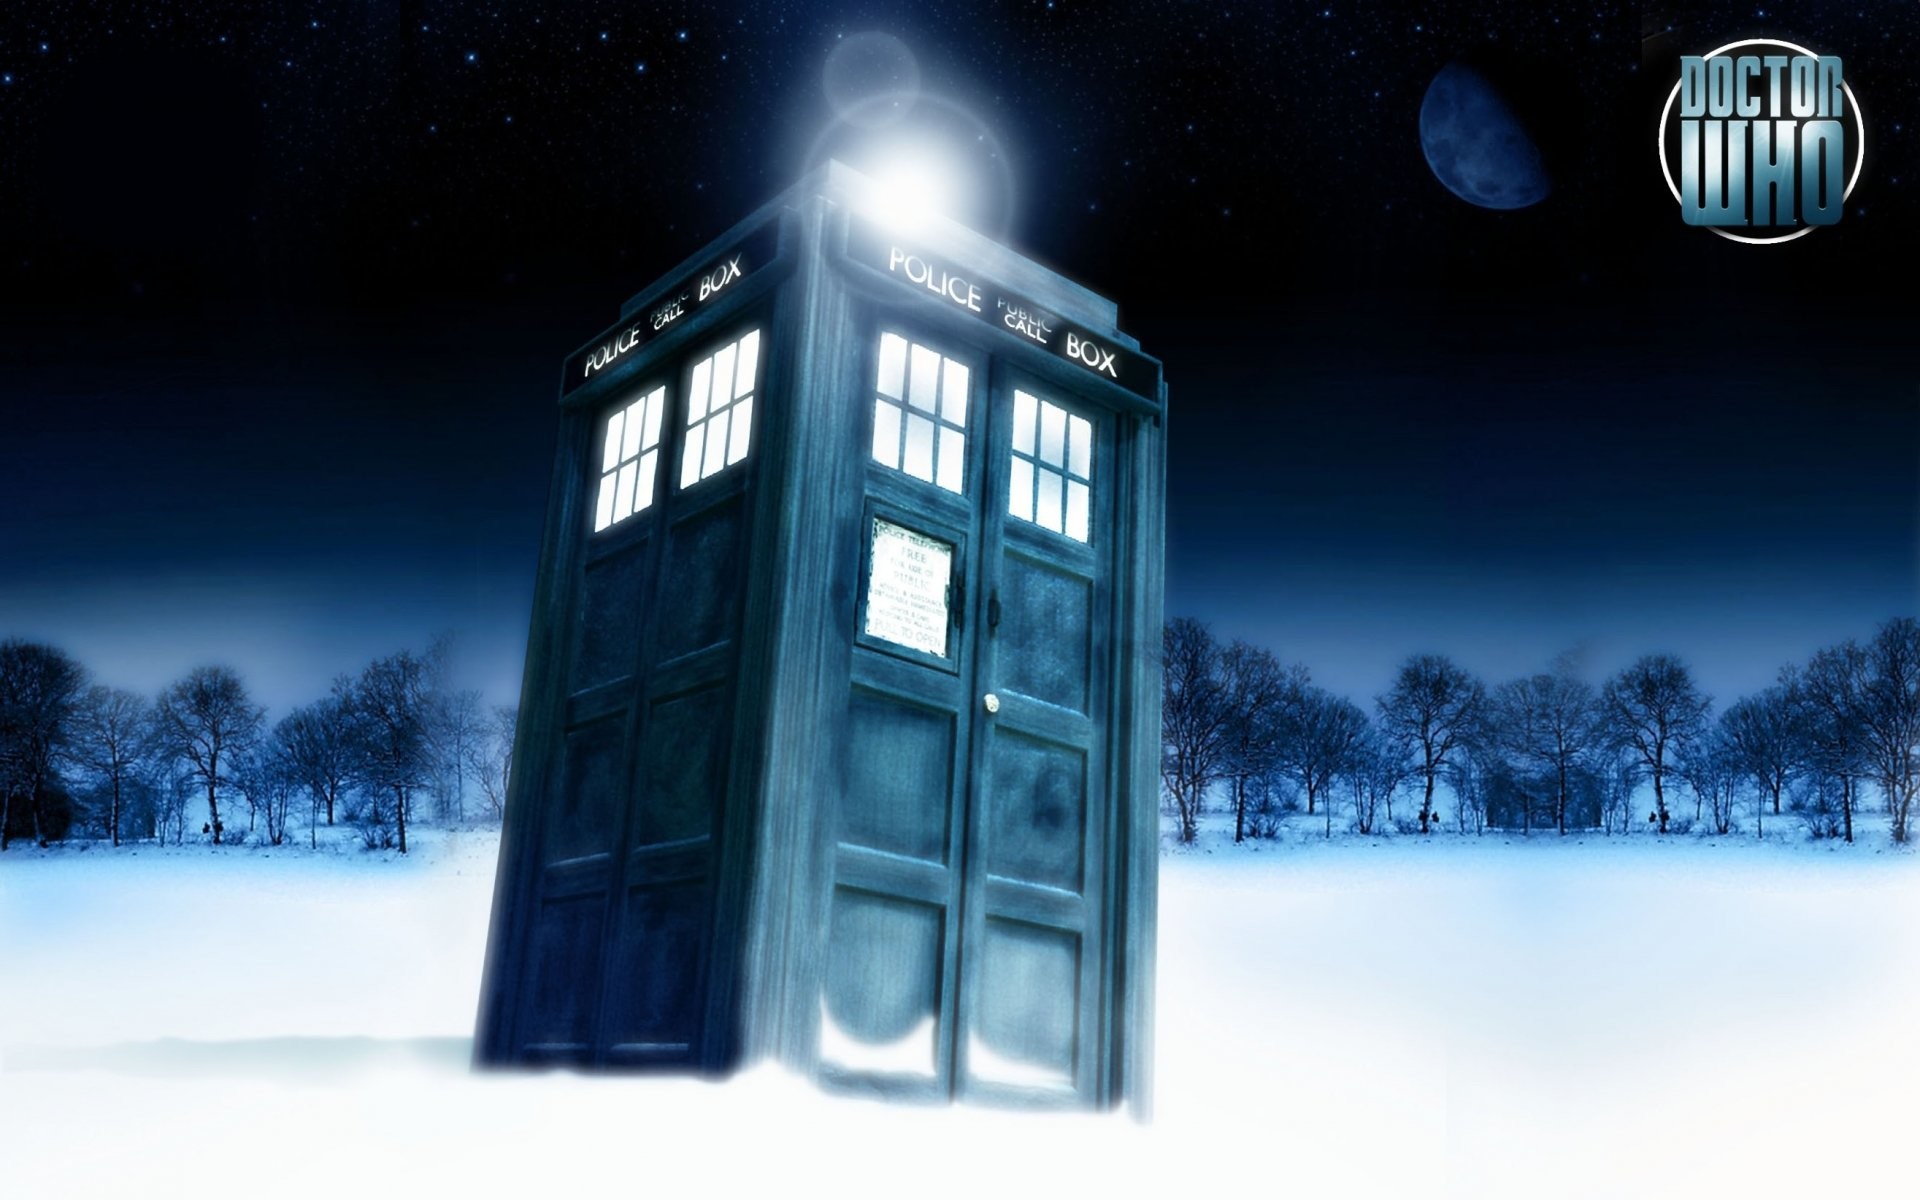 Doctor Who Tardis Wallpapers Hd Desktop And Mobile - Doctor Who Tardis Snow - HD Wallpaper 